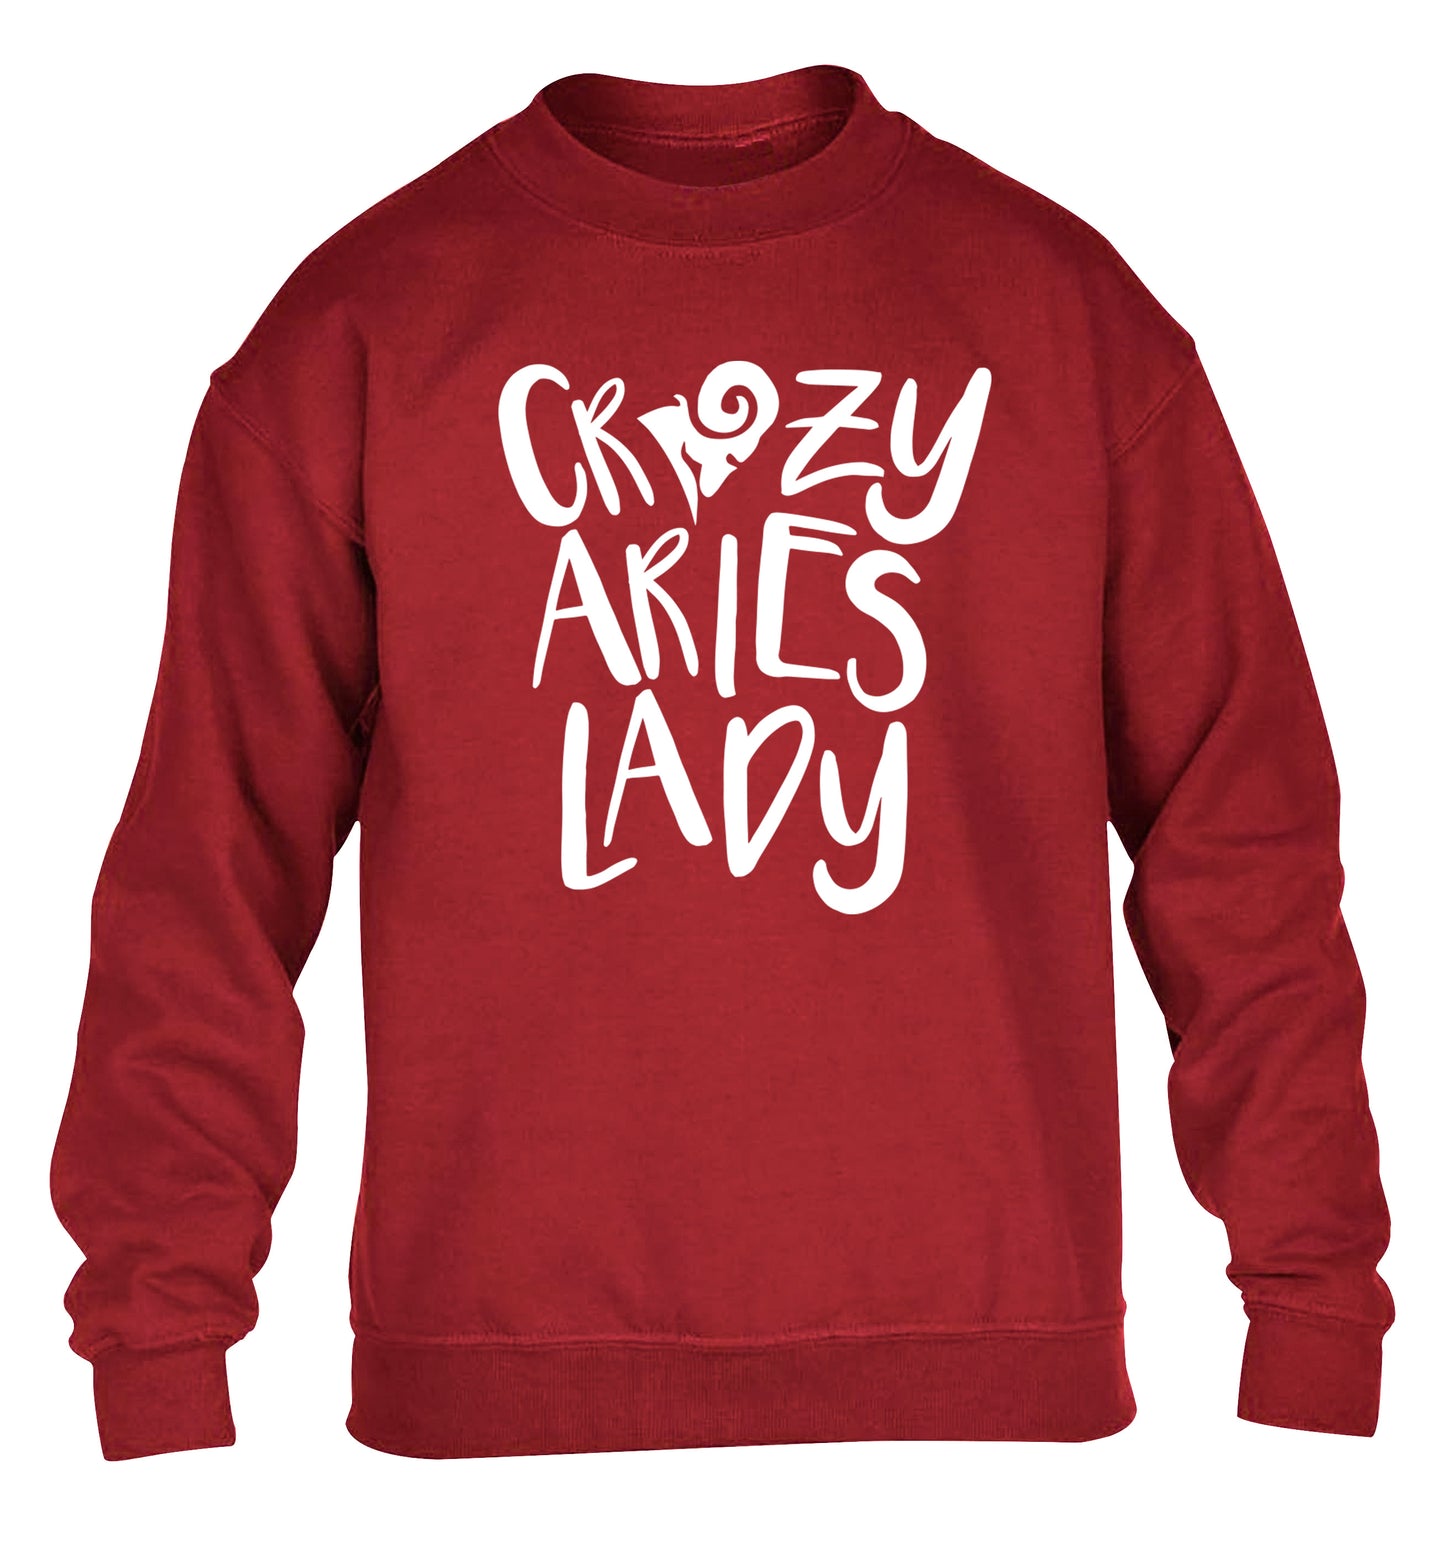 Crazy aries lady children's grey sweater 12-13 Years